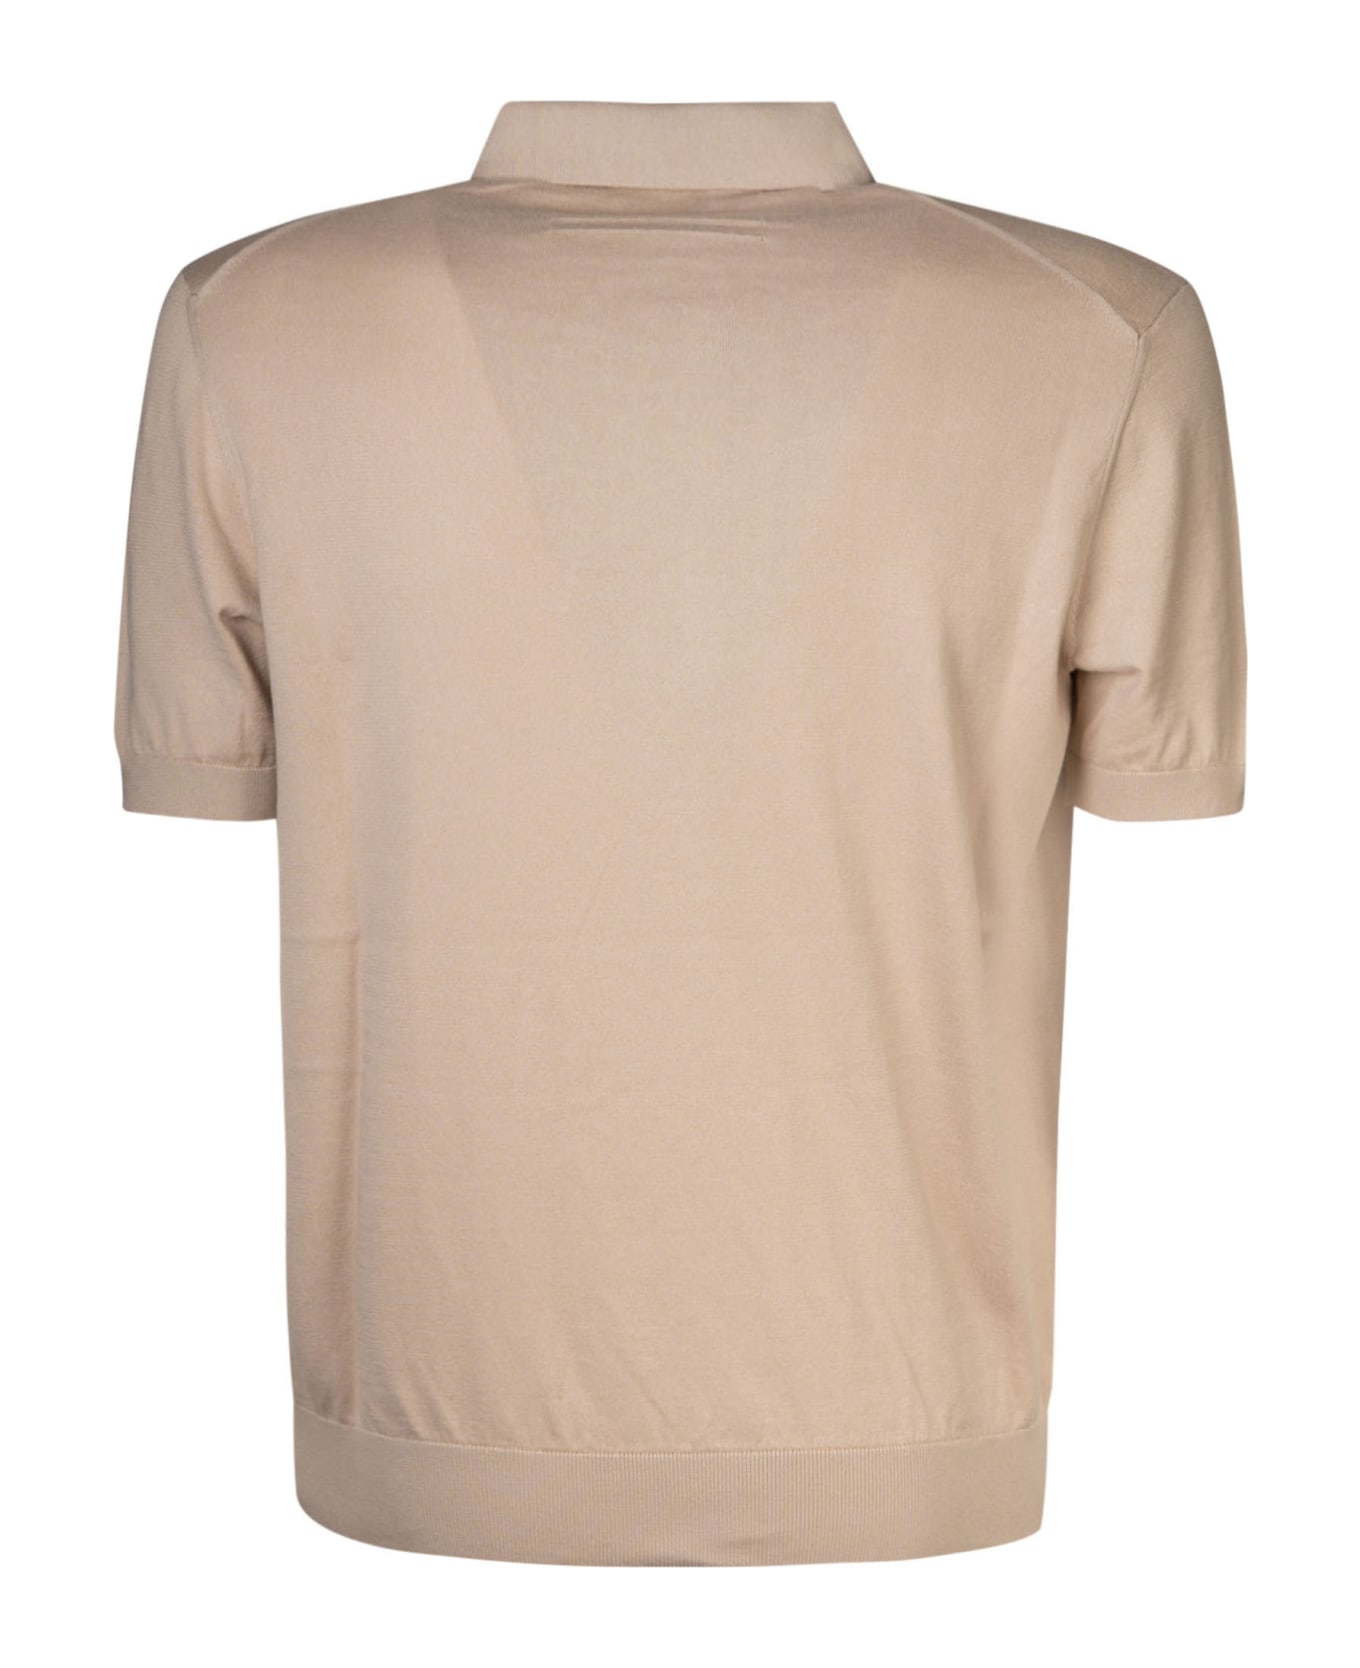 Zegna Short-sleeved Classic Polo Shirt - C シャツ